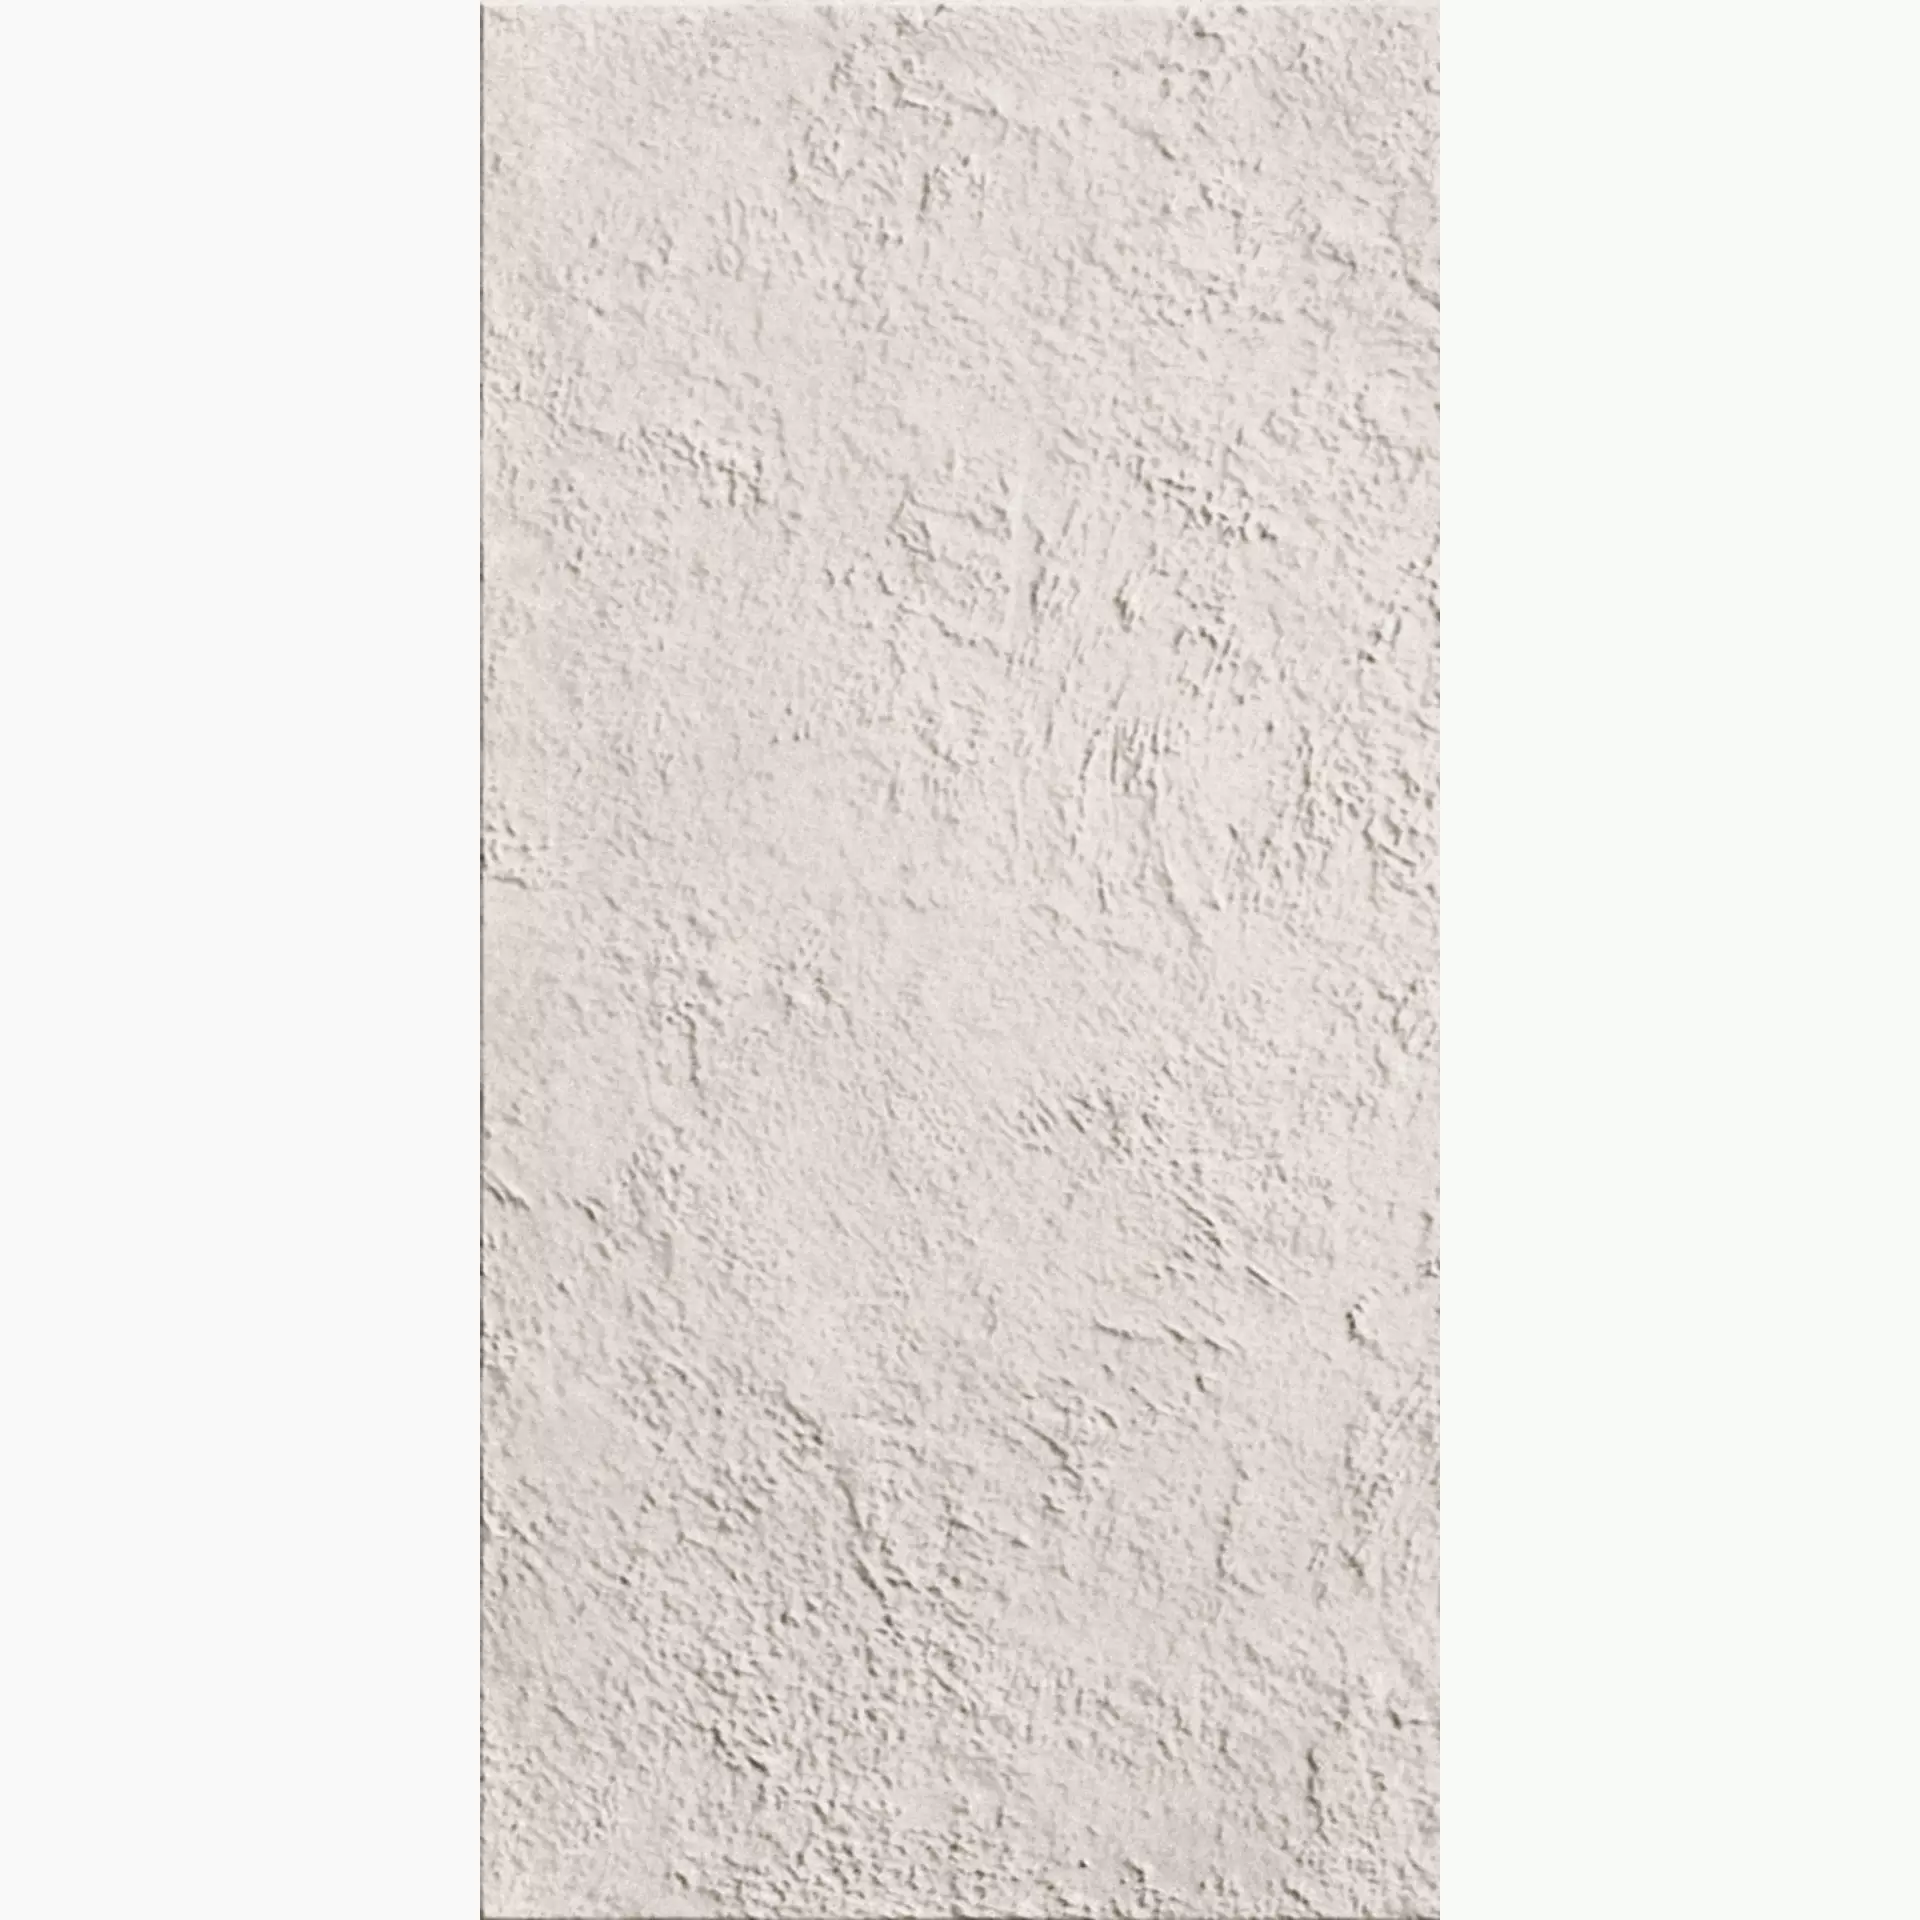 La Faenza Cottofaenza White Natural Bush-Hammered Rustic Matt Outdoor Floor 156395 30x60cm rectified 10mm - COTTOF. RB36W